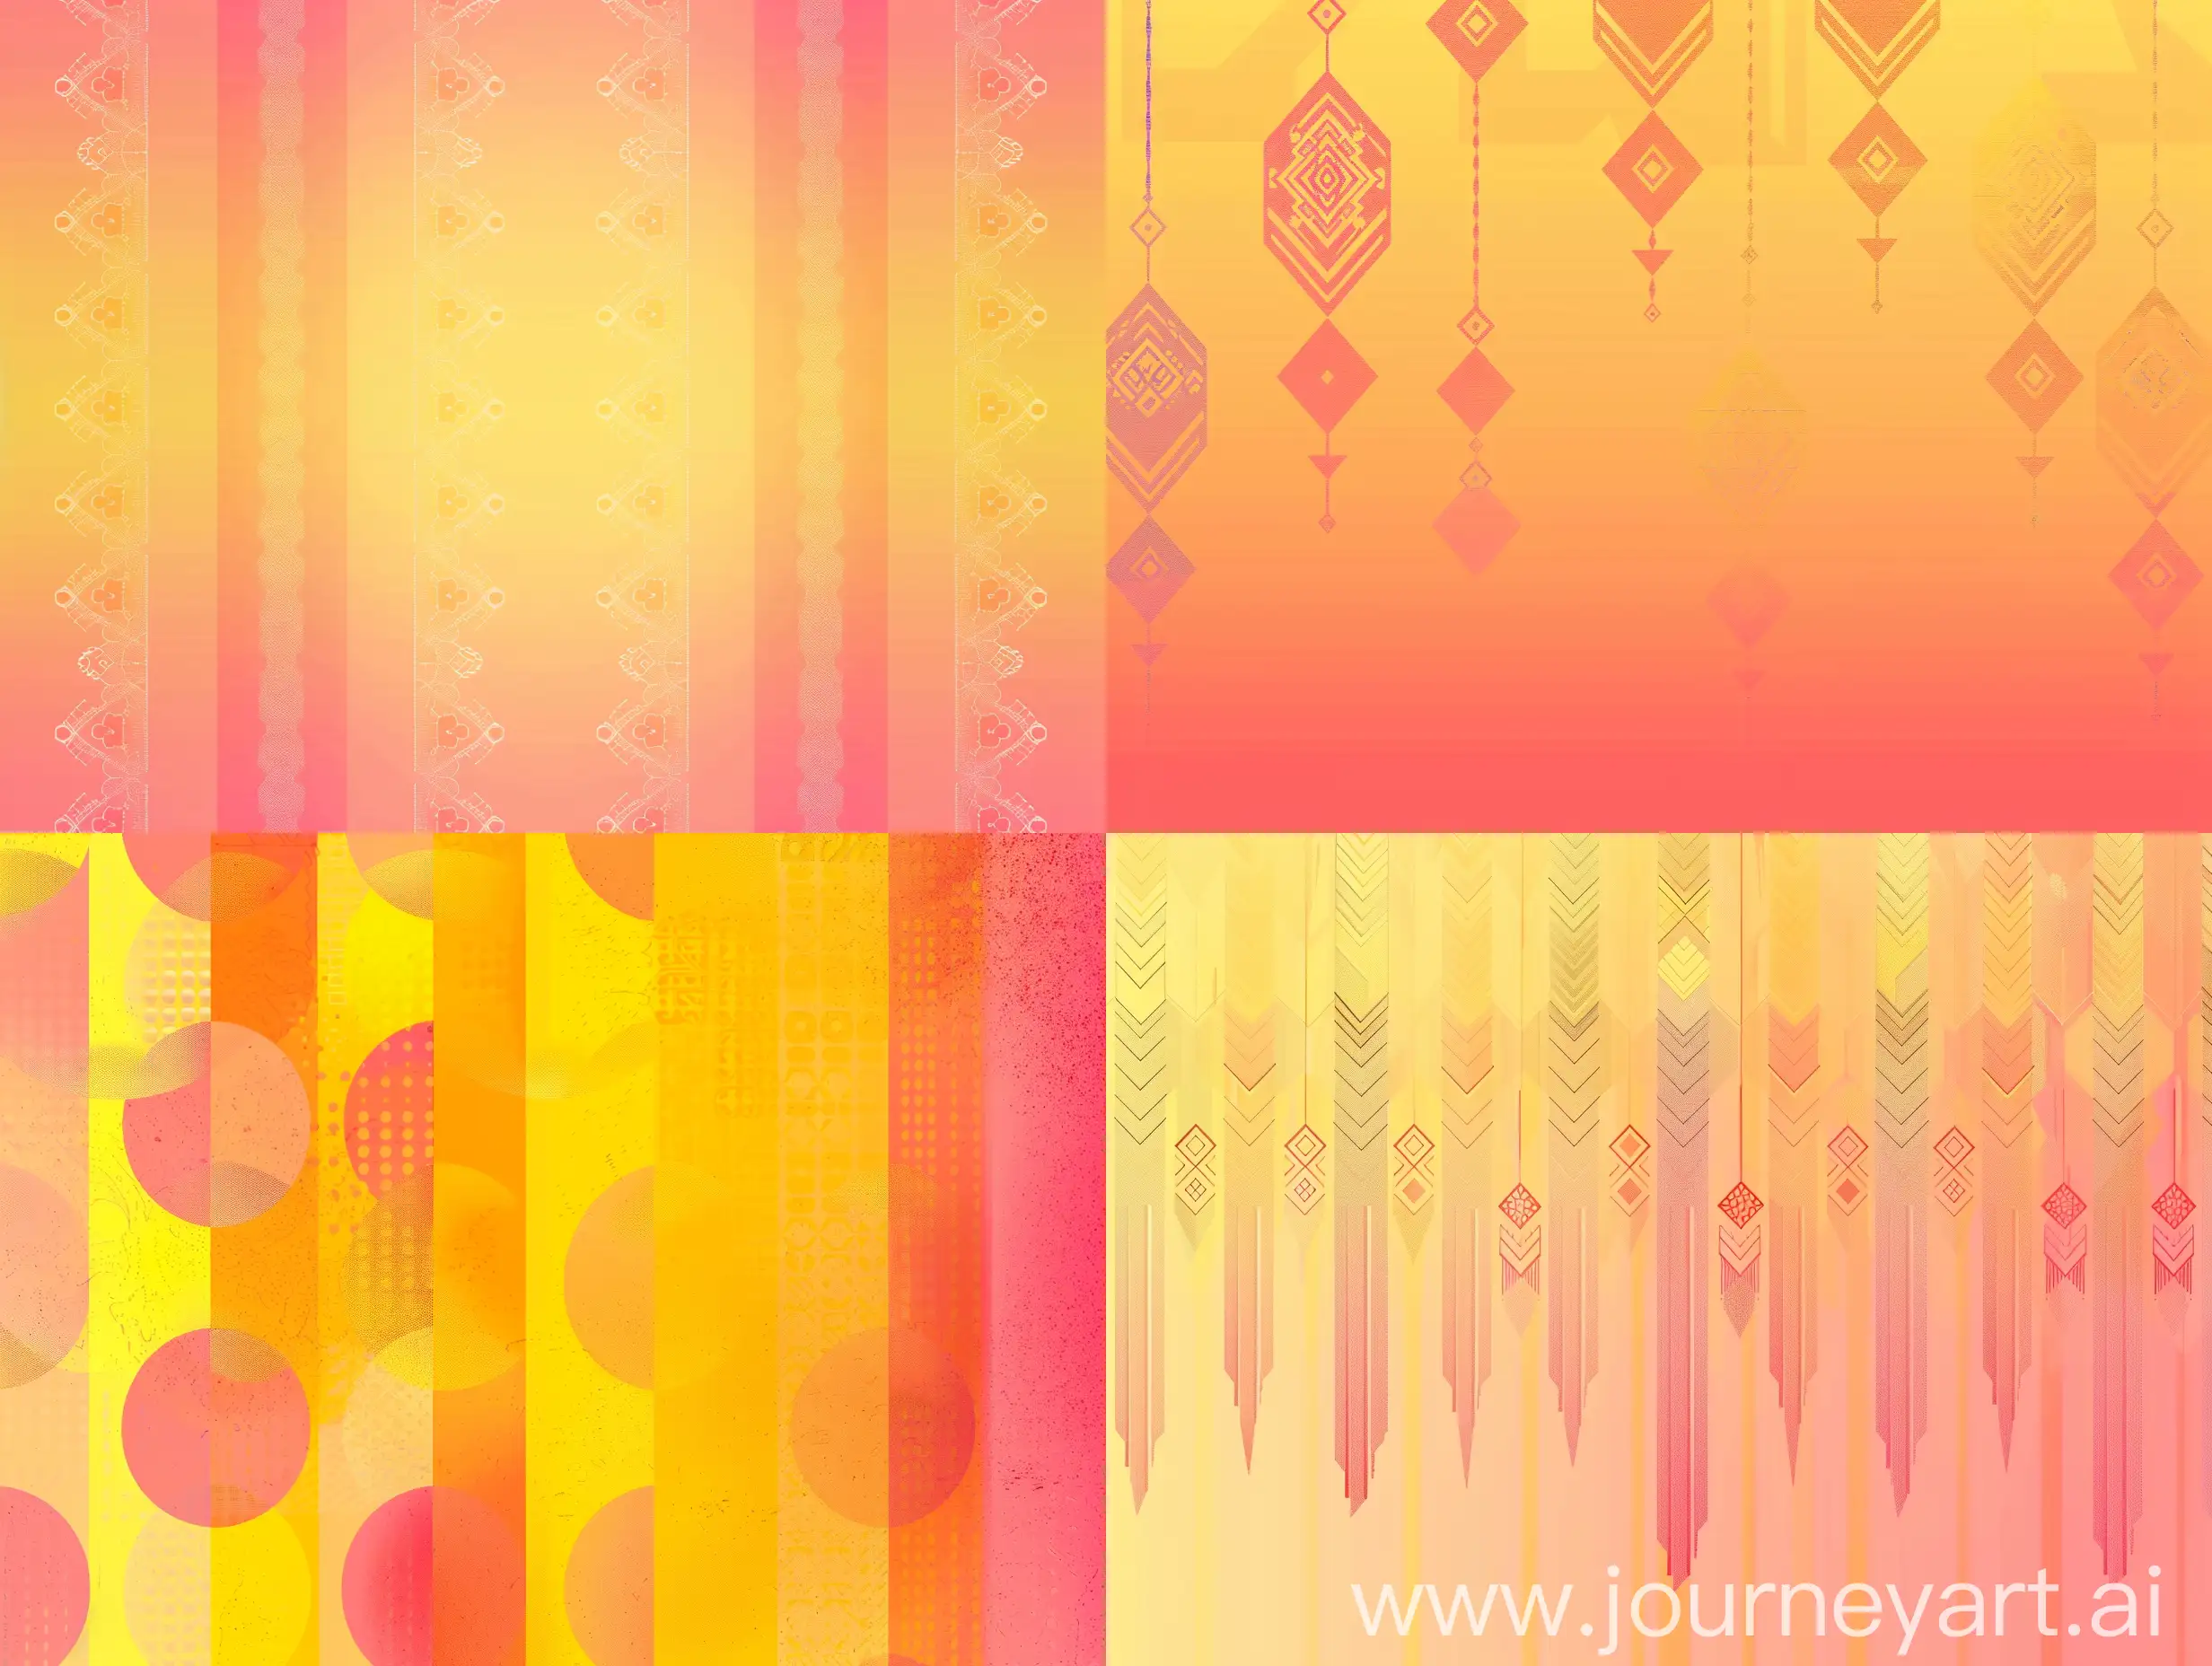 Vibrant-Geometric-Ornament-on-YellowOrangePink-Gradient-Background